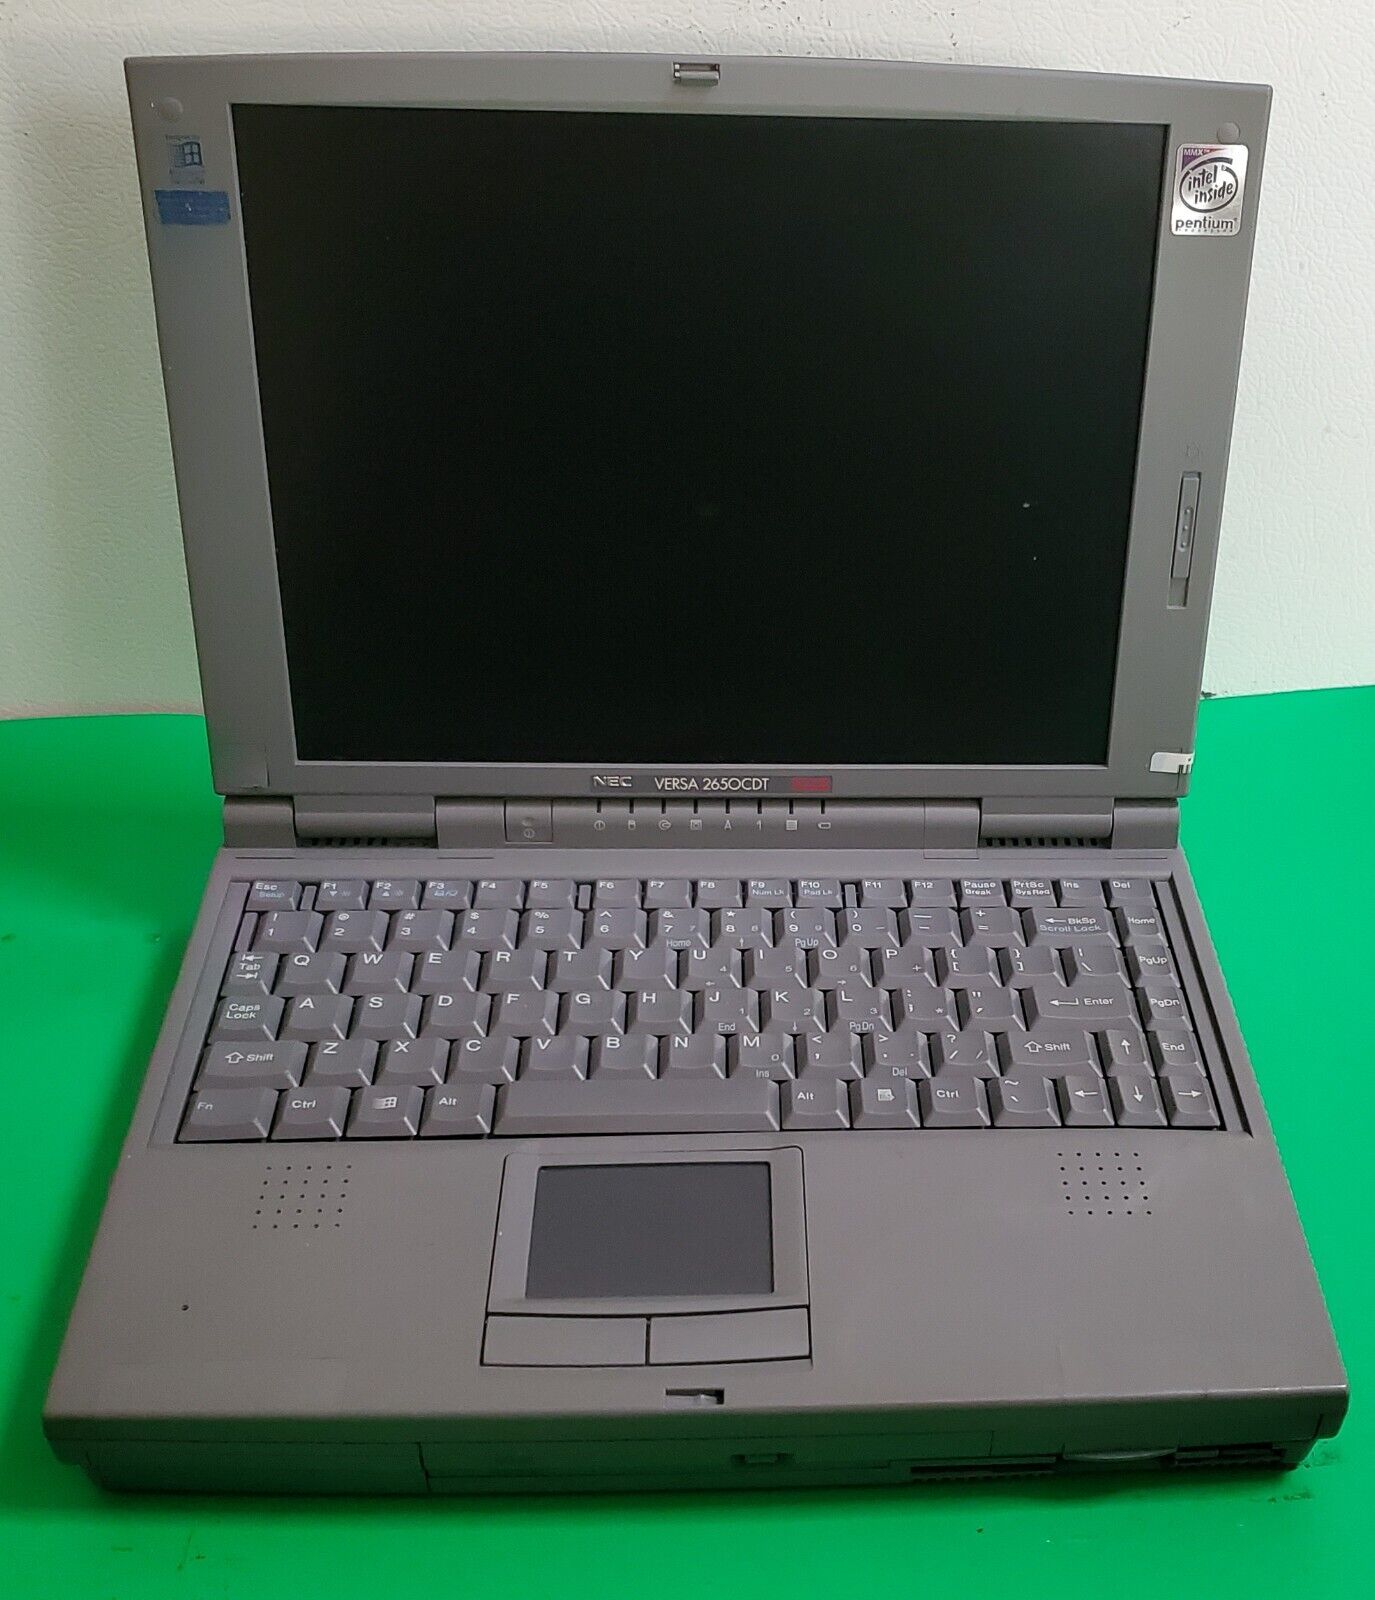 VINTAGE NEC Versa 2650CDT Model PC-6620 Notebook Laptop Computer Retro - as is